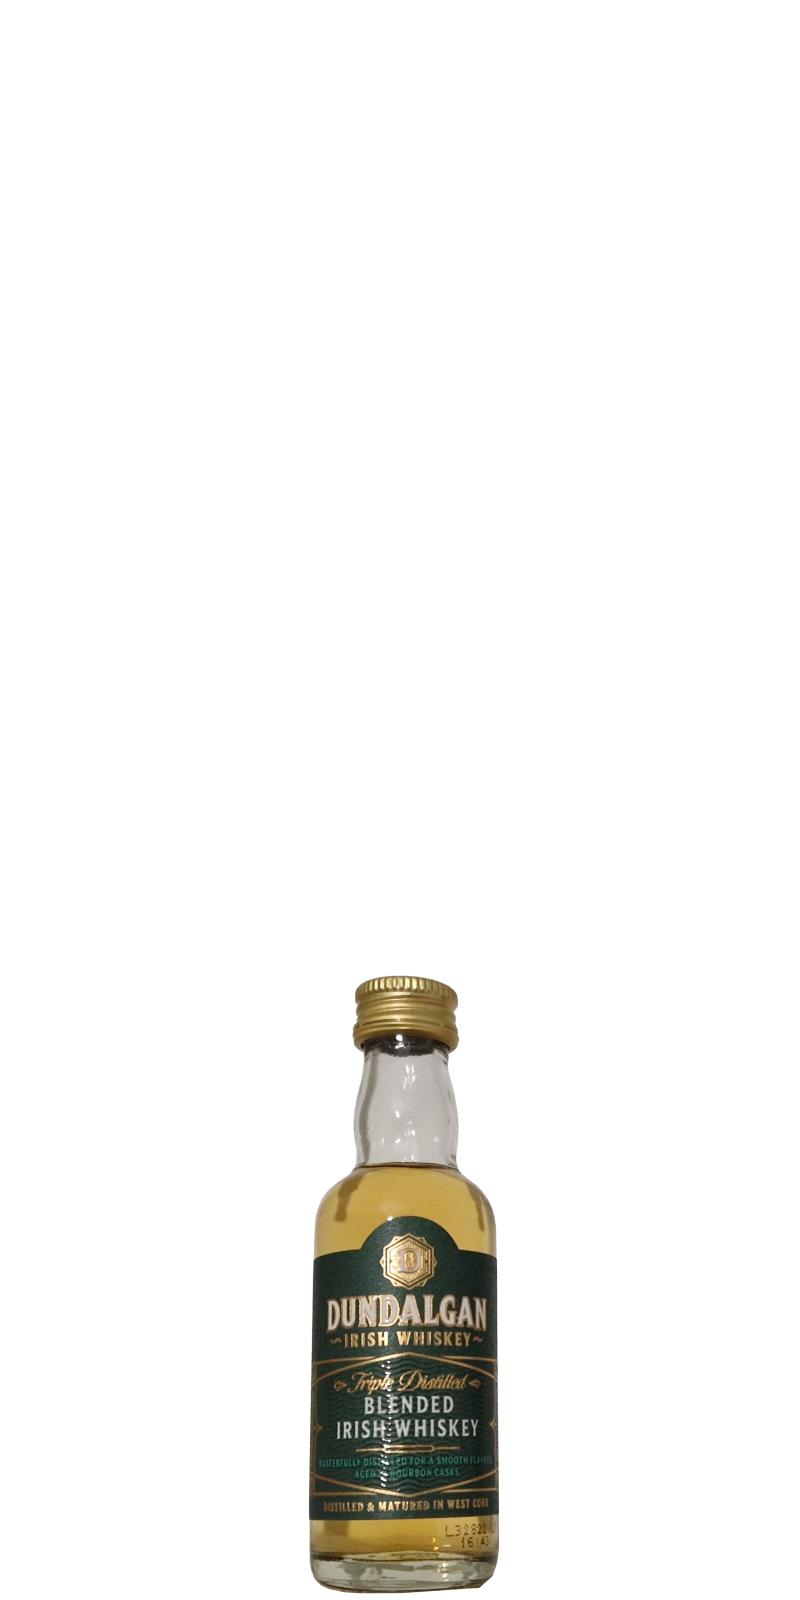 Dundalgan Blended Irish Whiskey - Ratings and reviews - Whiskybase | Whisky